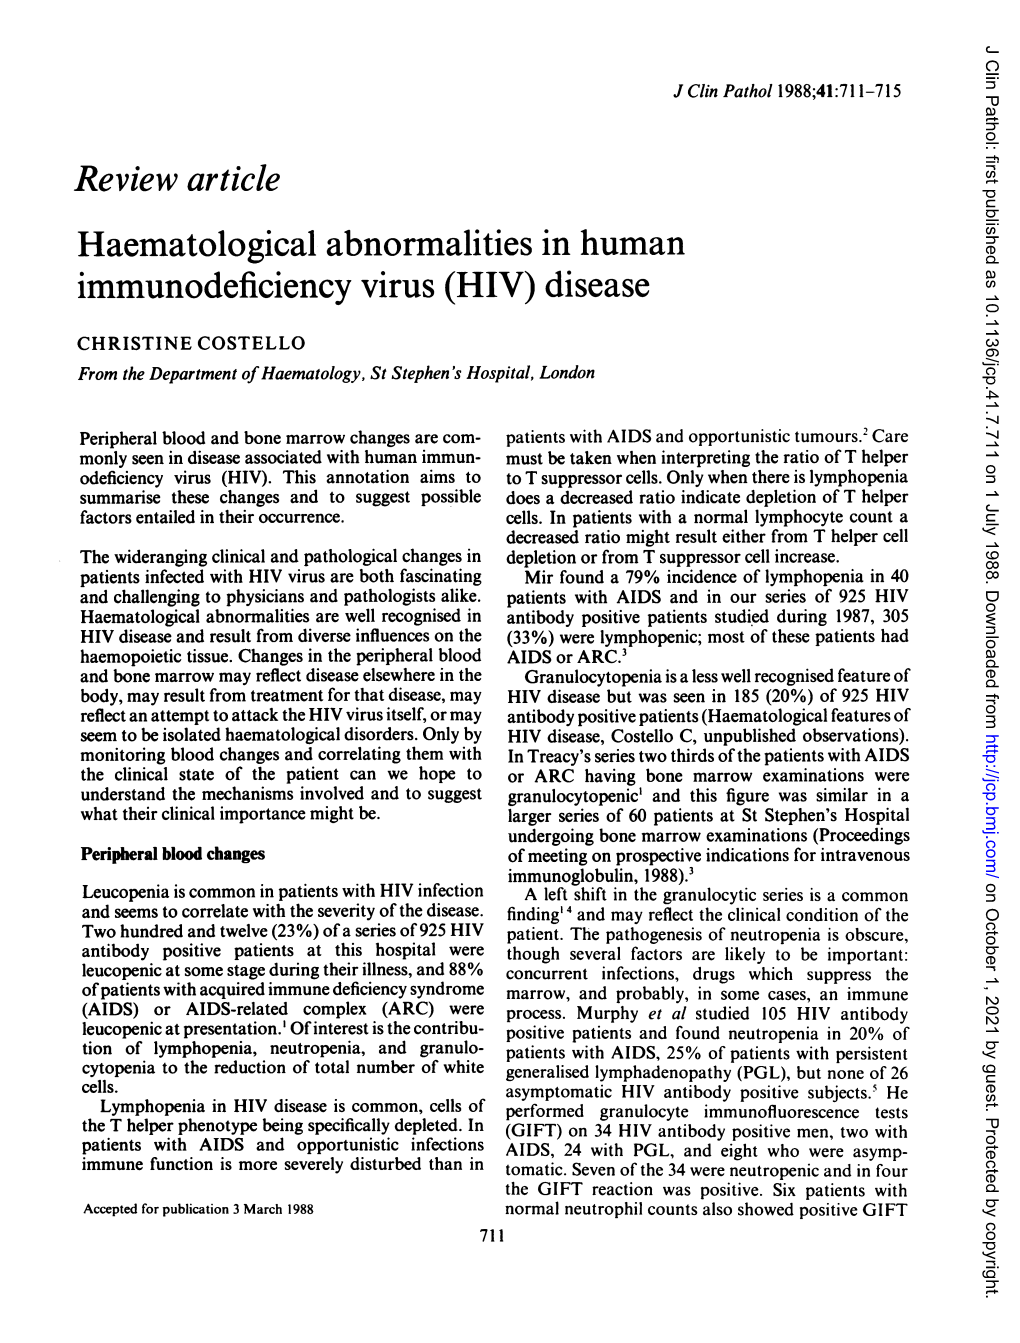 Haematological Abnormalities in Human Immunodeficiency Virus (HIV) Disease